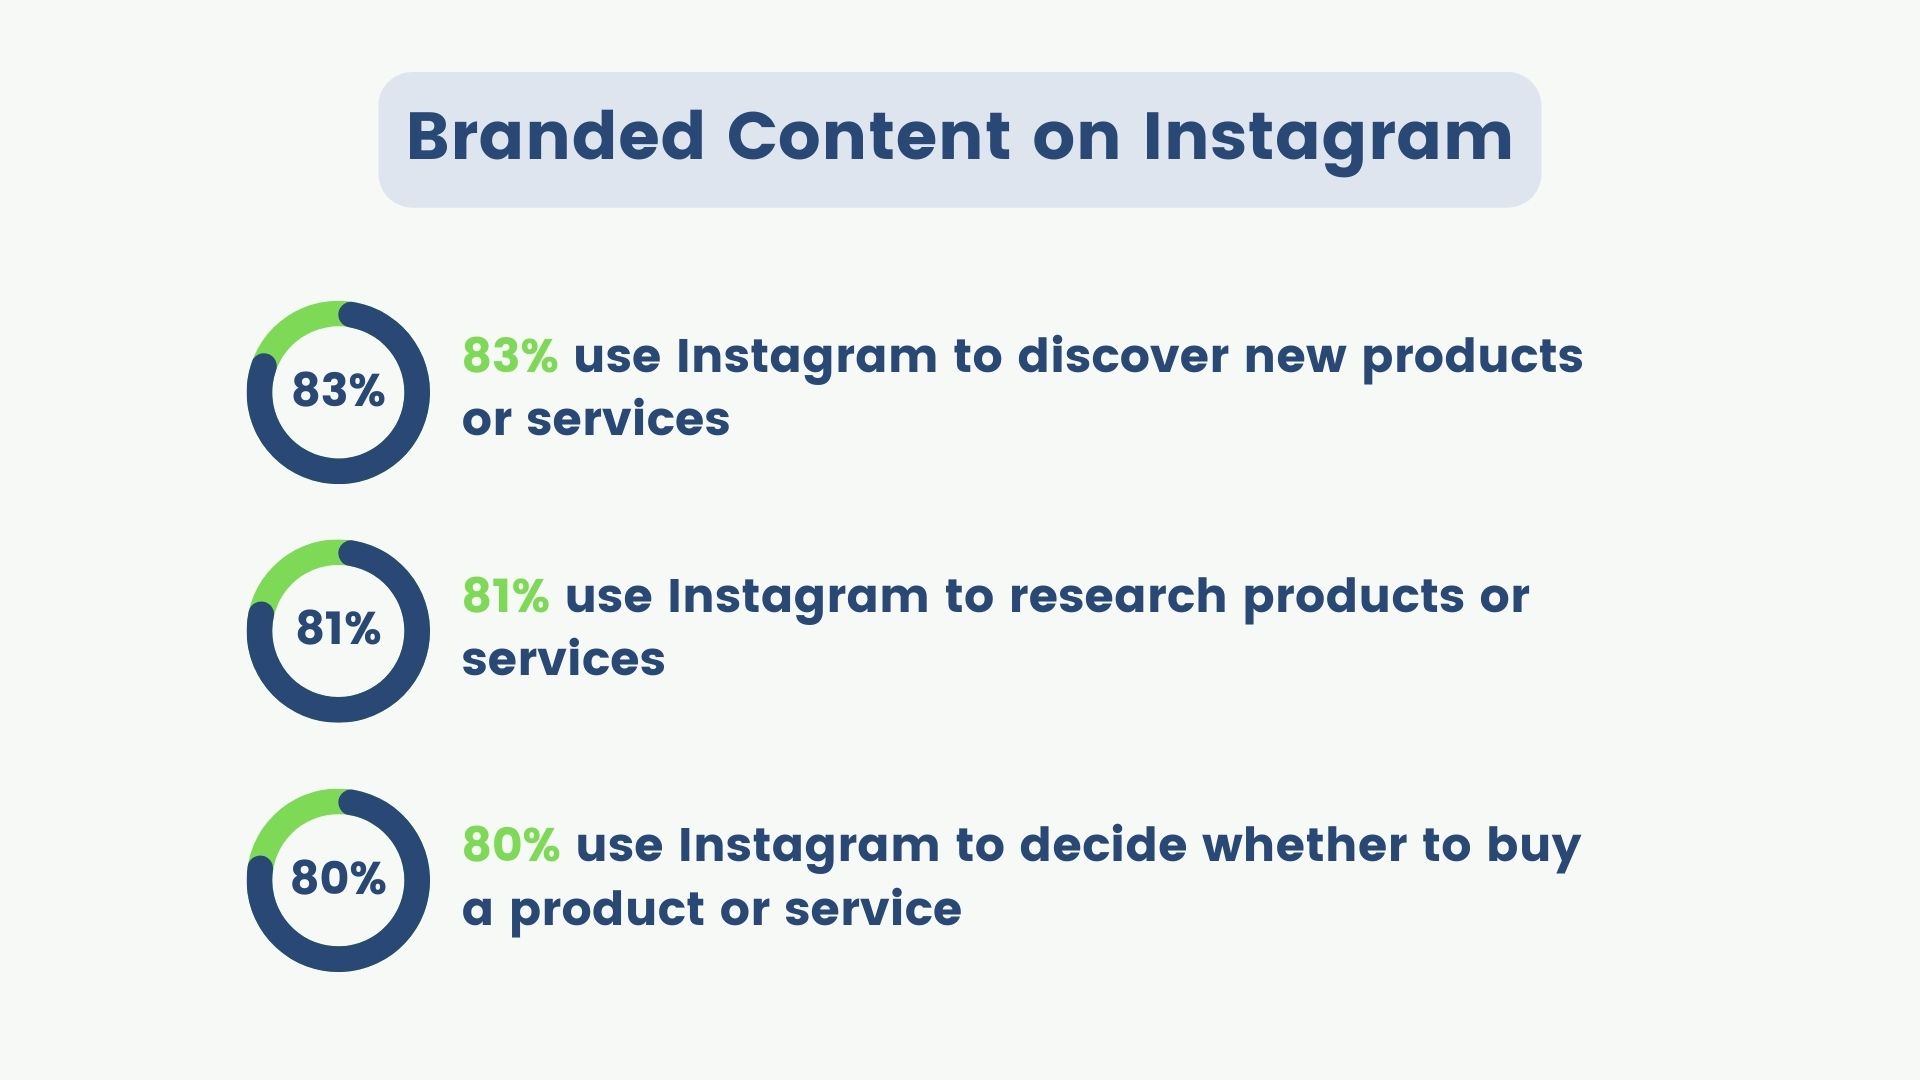 Branded content on Instagram